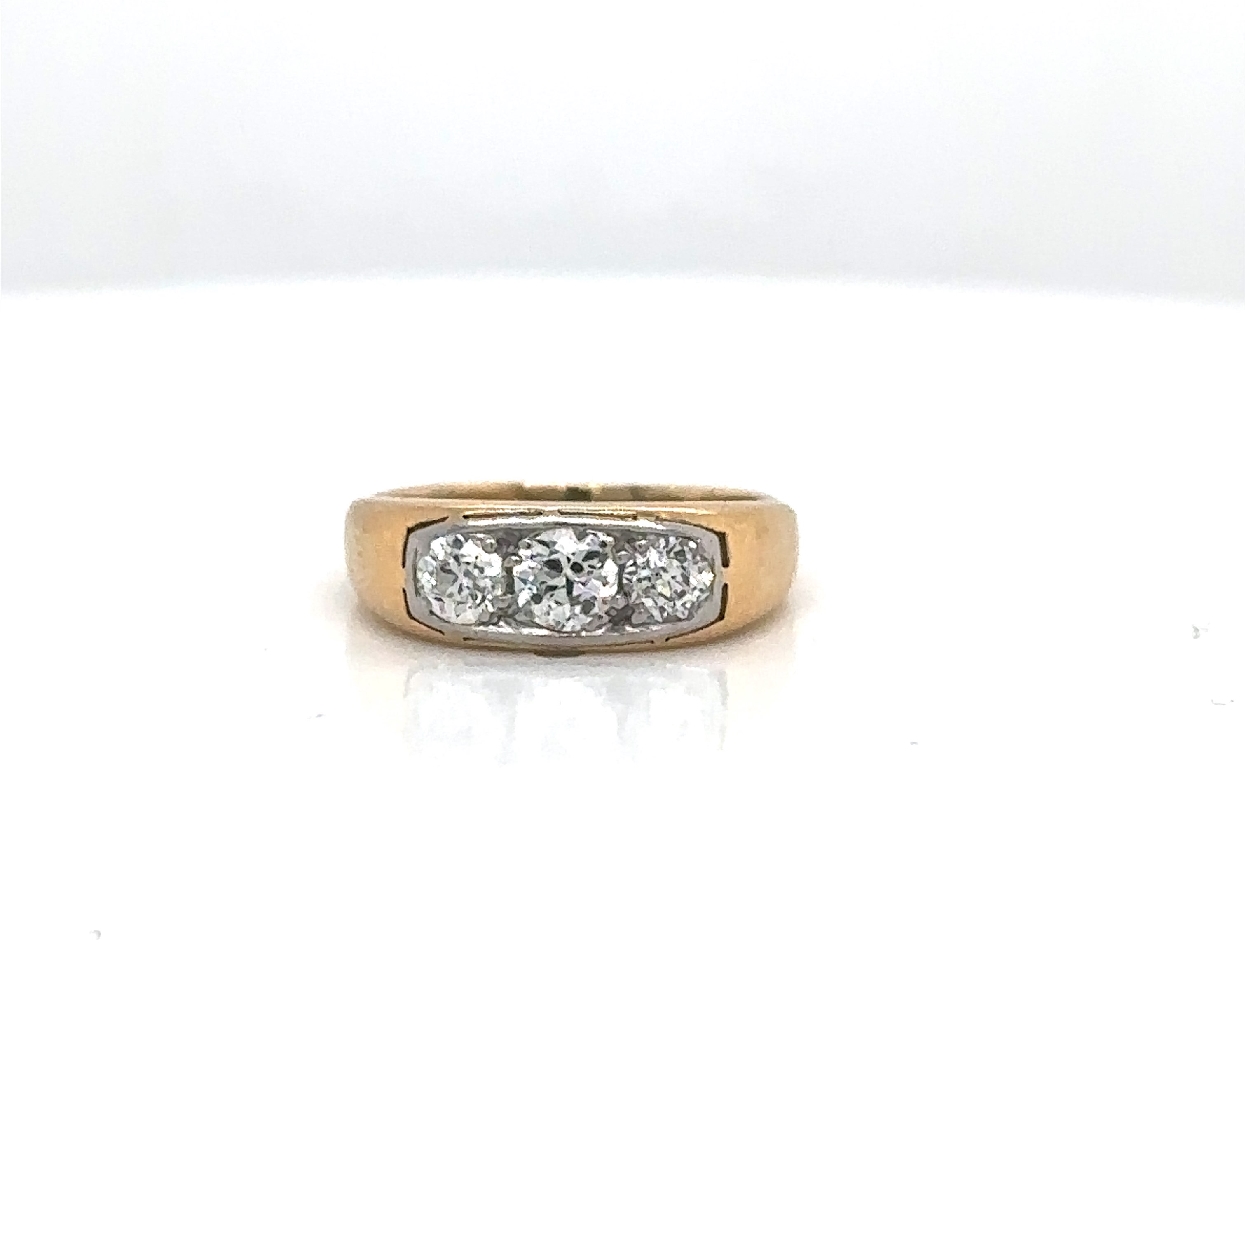 18K Yellow Gold Diamond Ring

Size 4.25